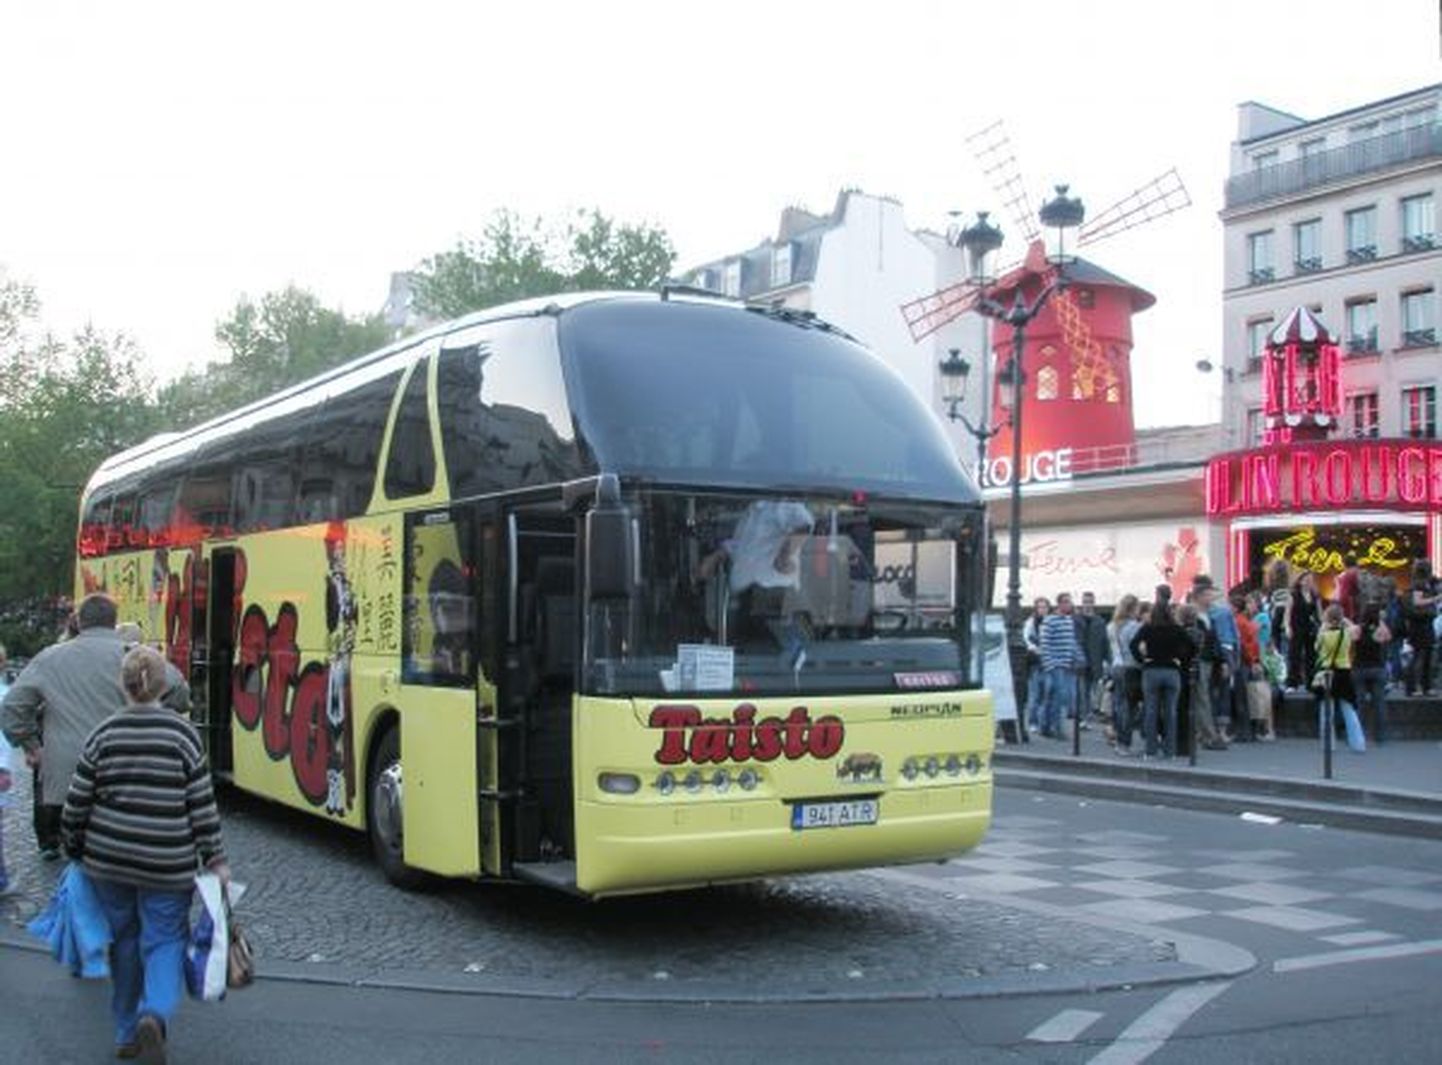 Автобус фирмы Taisto. Иллюстративное фото.